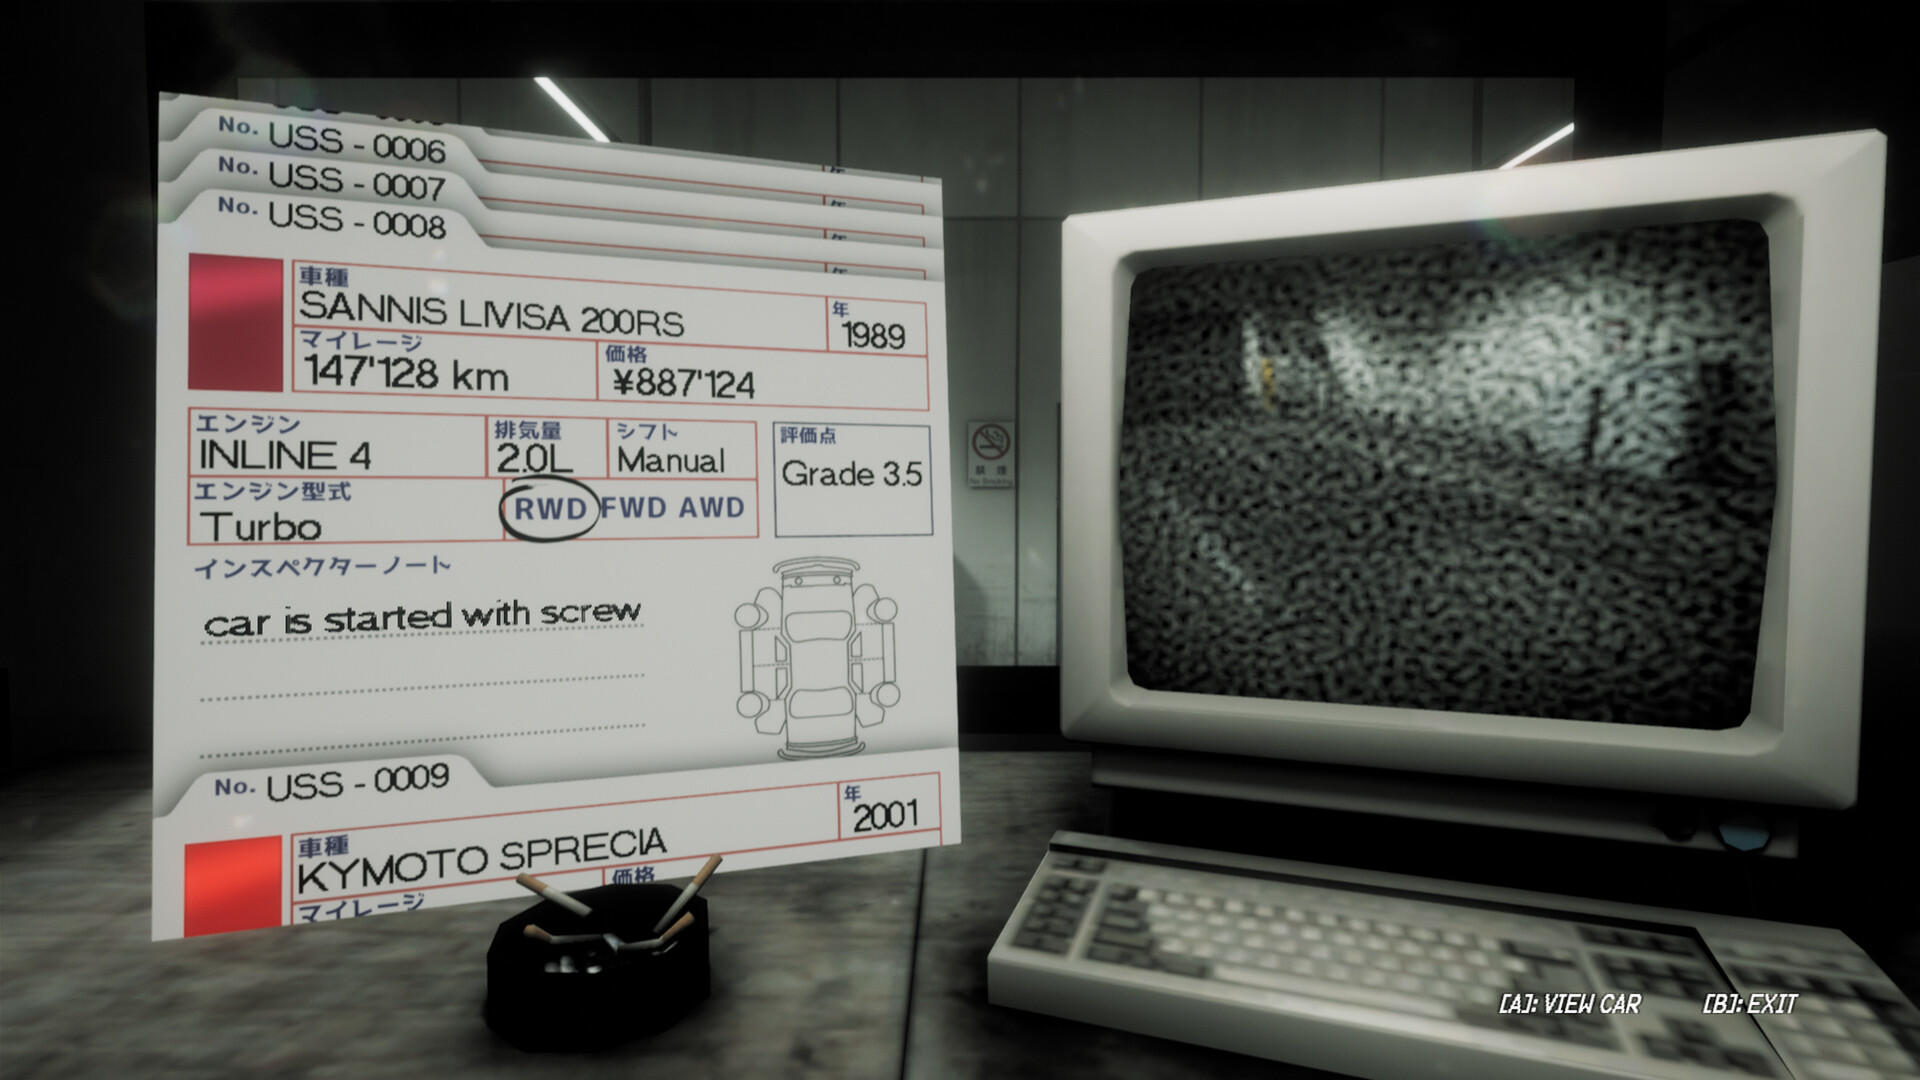 NIGHT-RUNNERS™ PROLOGUE screenshot game